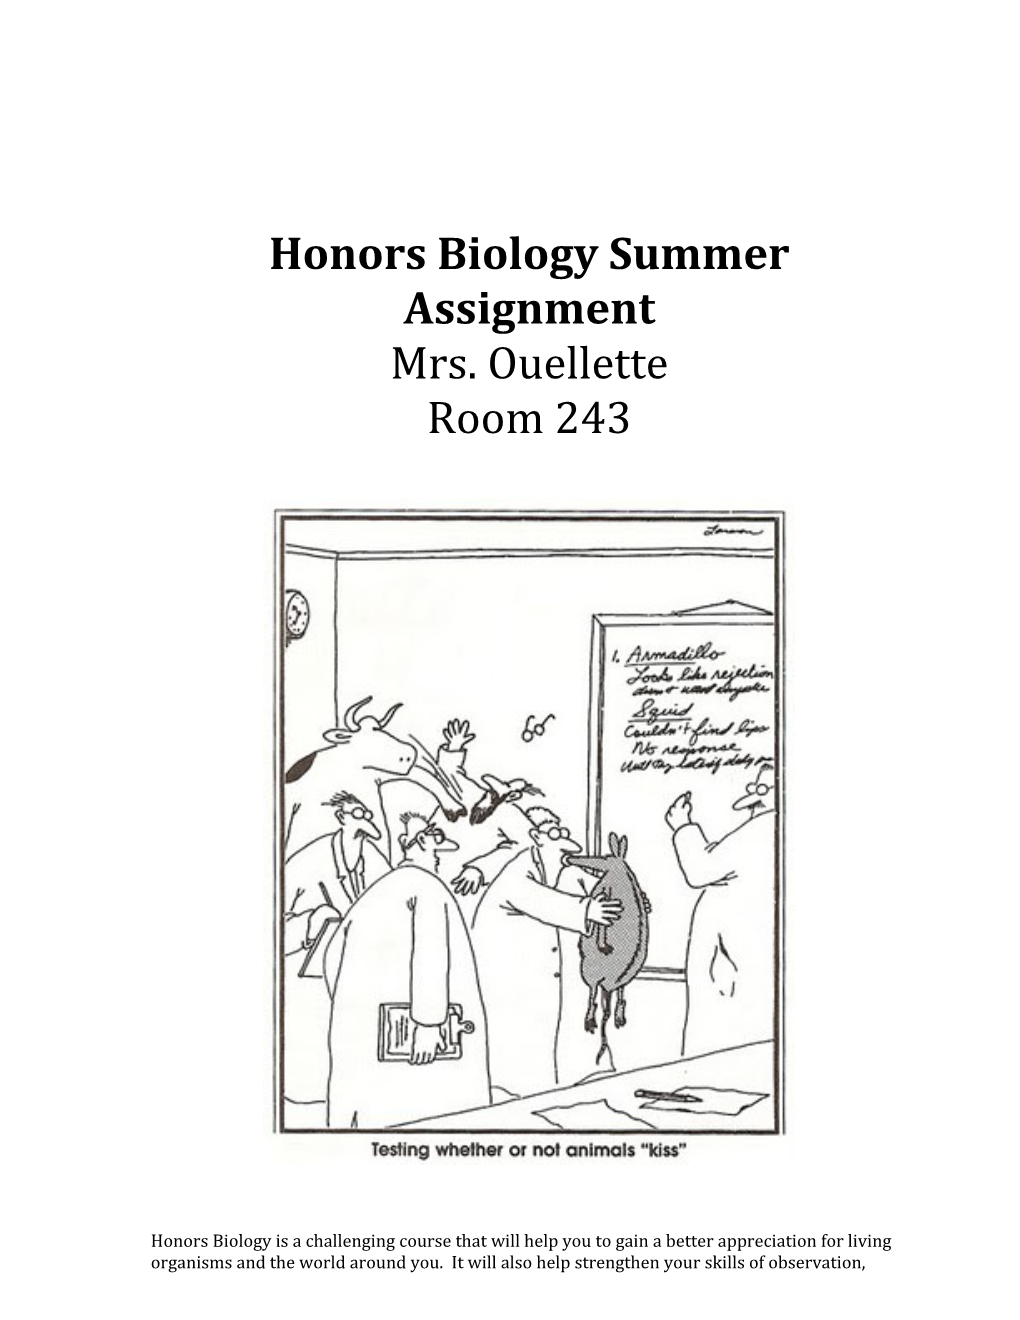 Honors Biology Summer Assignment Mrs. Ouellette